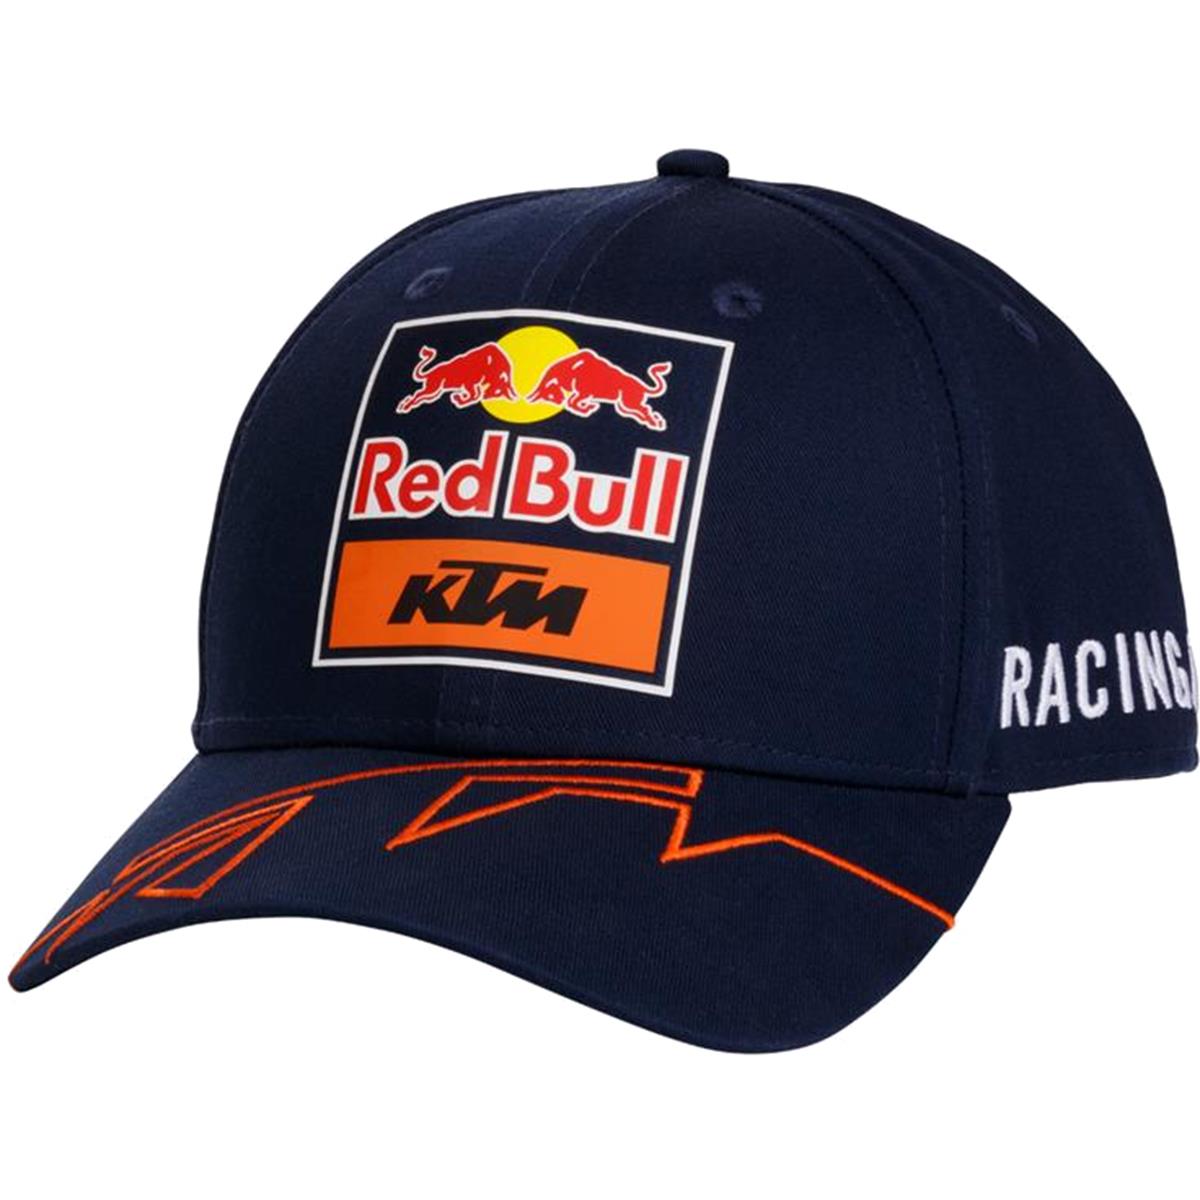 Bonnet Enfant Red Bull KTM réversible